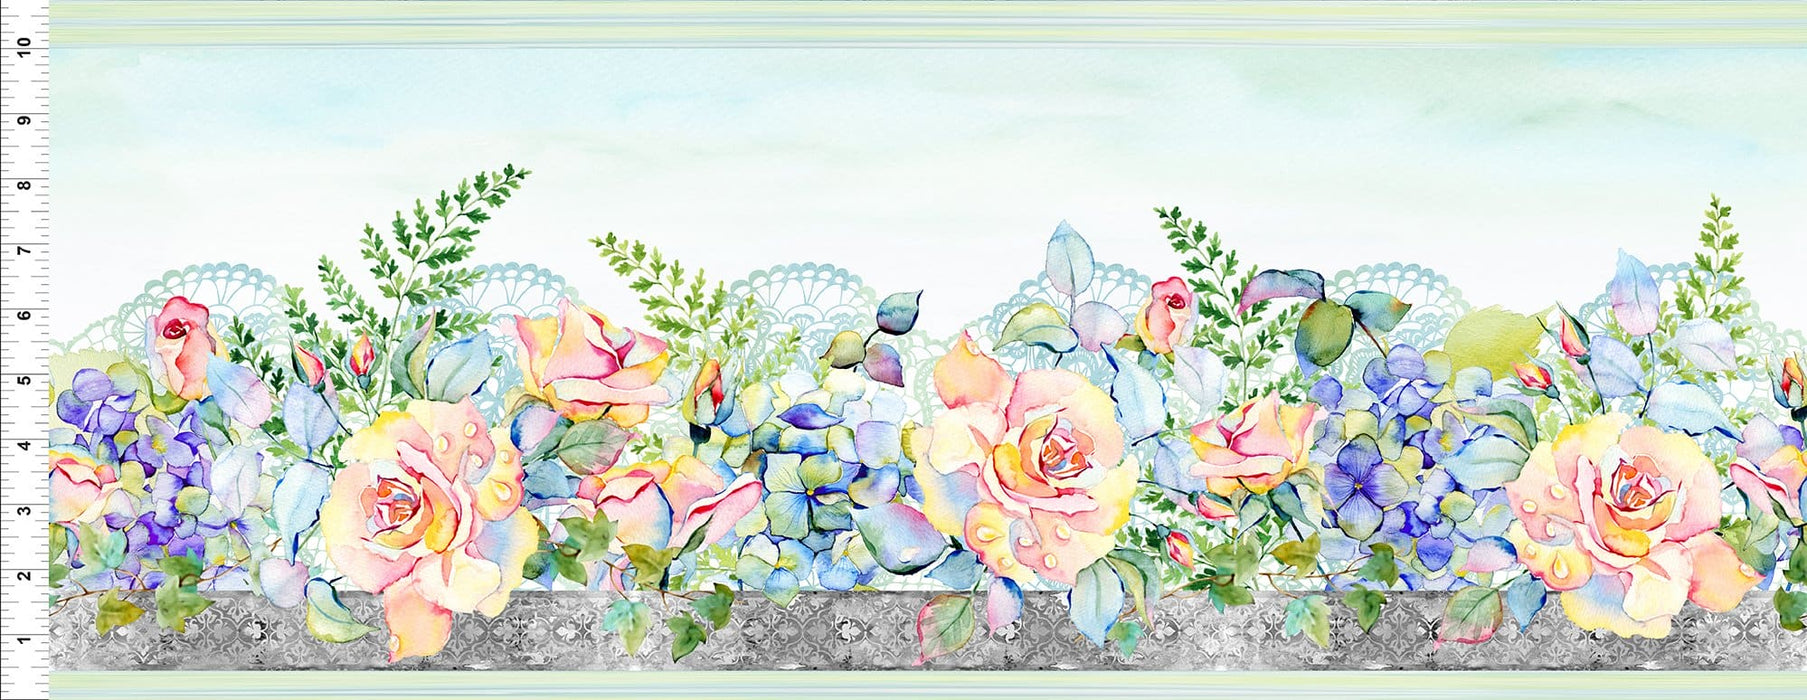 Patricia - Multicolor Butterflies - Per Yard - by In The Beginning Fabrics - Floral, Pastels, Digital Print - Multi - 4PAT1